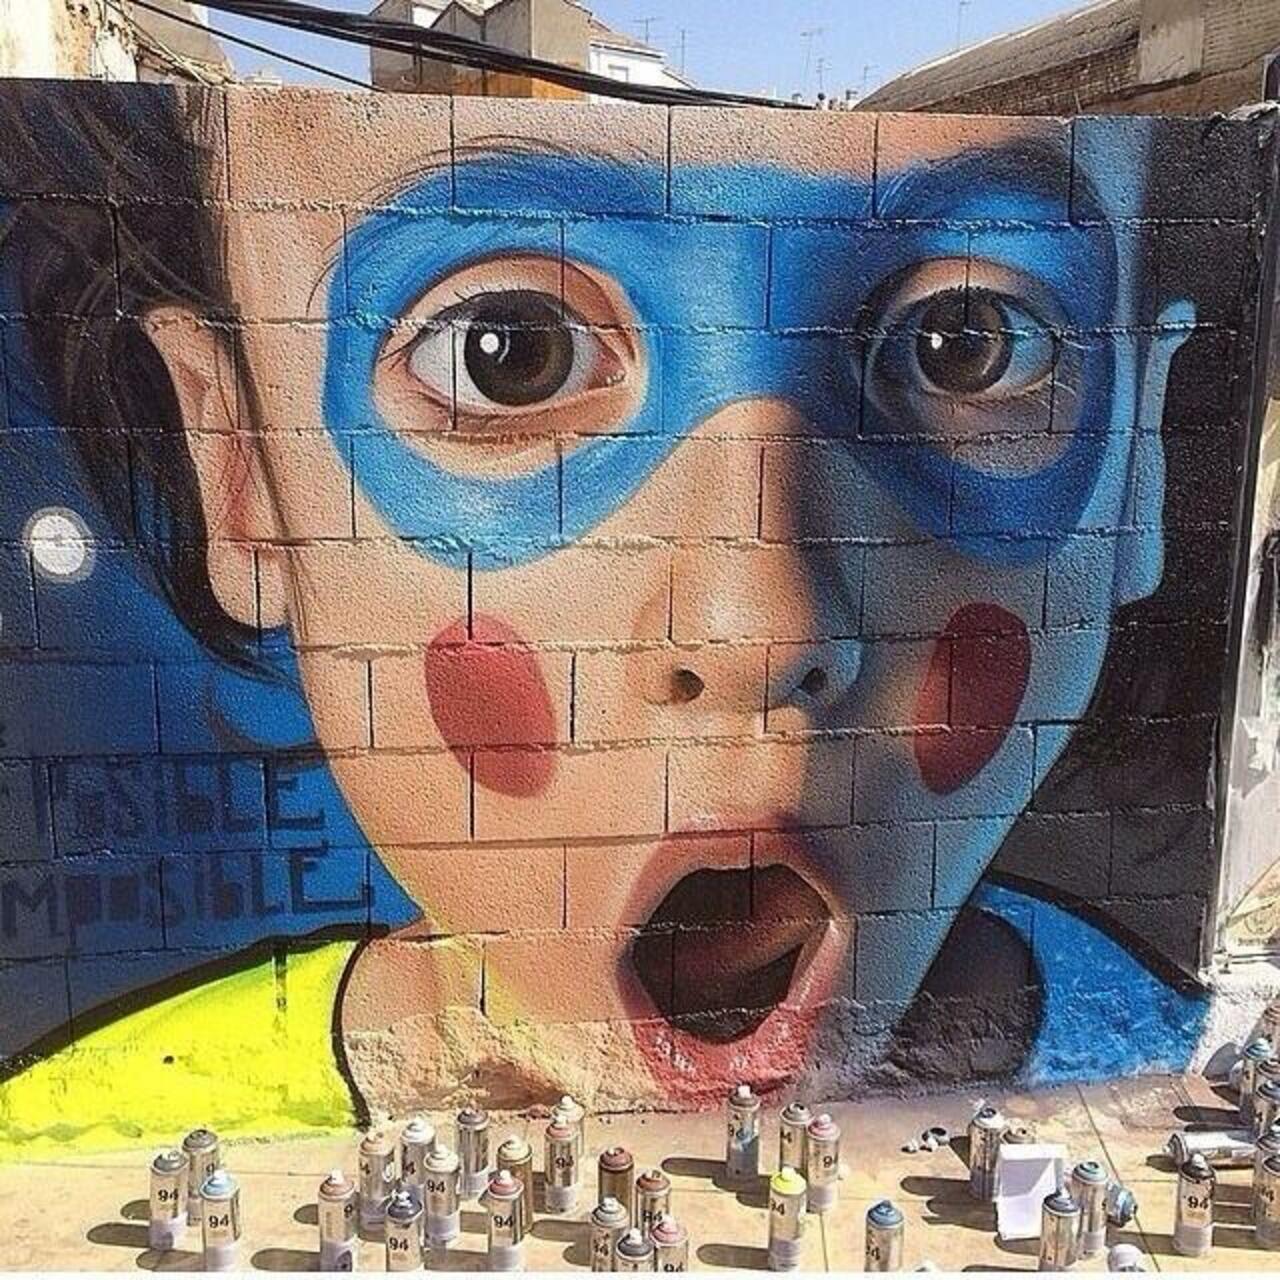 Artist @Belinwan unique Street Art portrait piece located in Linares, Spain #art #mural #graffiti #streetart http://t.co/dEDCC21Aoz